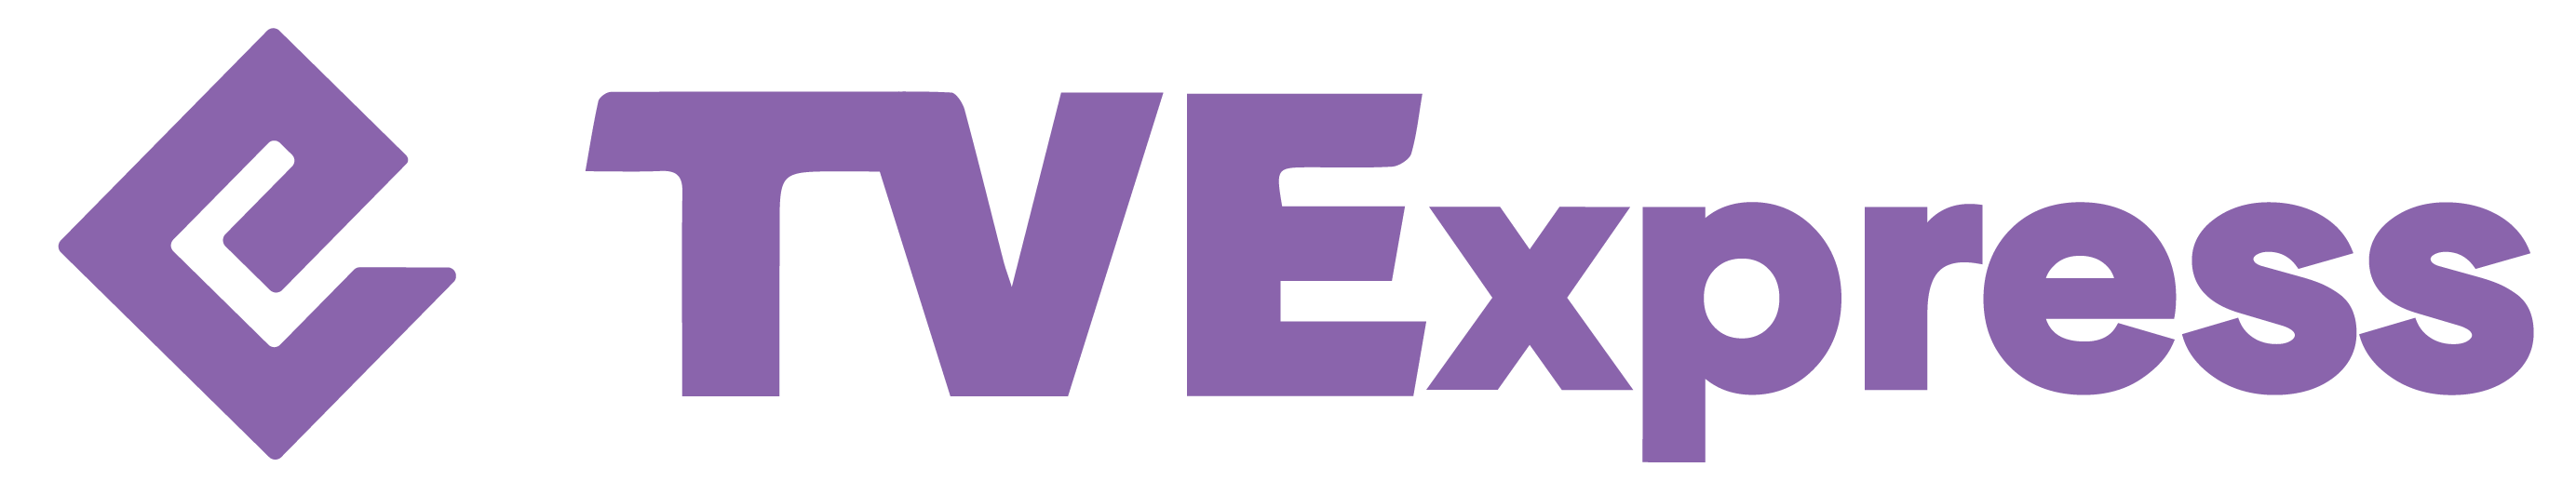 Marcas TVExpress violeta